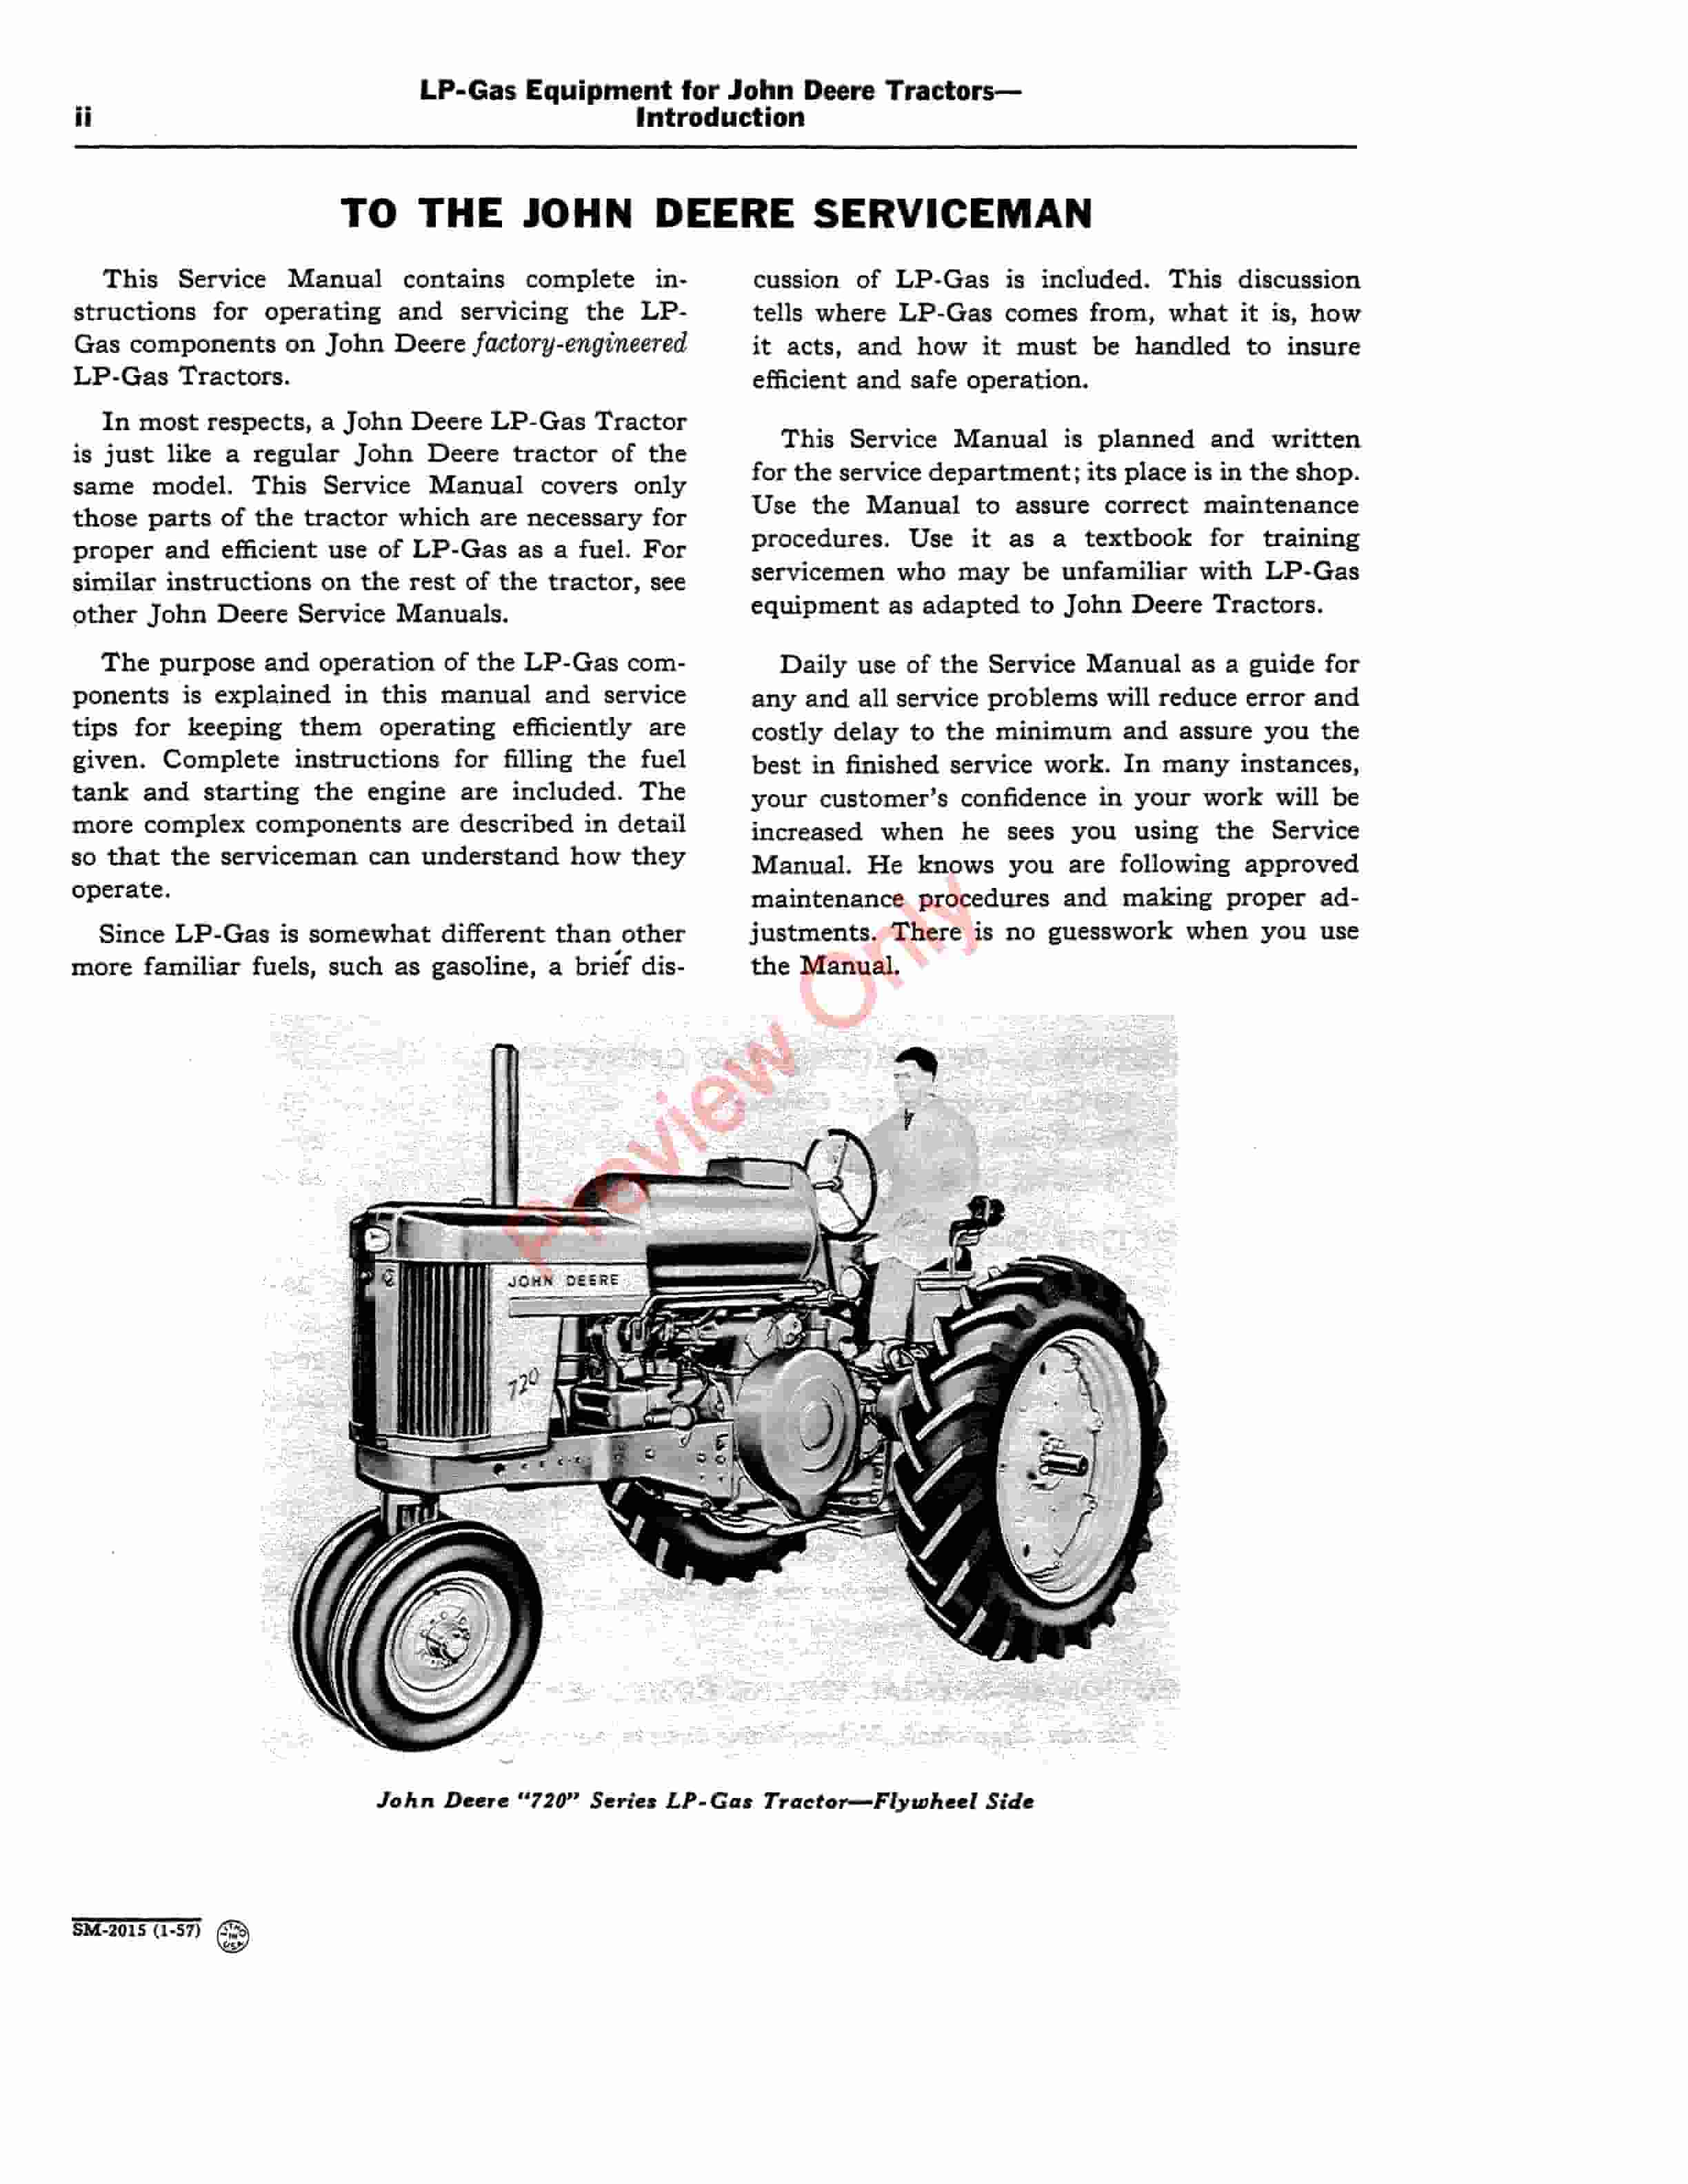 John Deere LP Gas Equipment for Tractors Service Manual SM2015 01JAN57-4